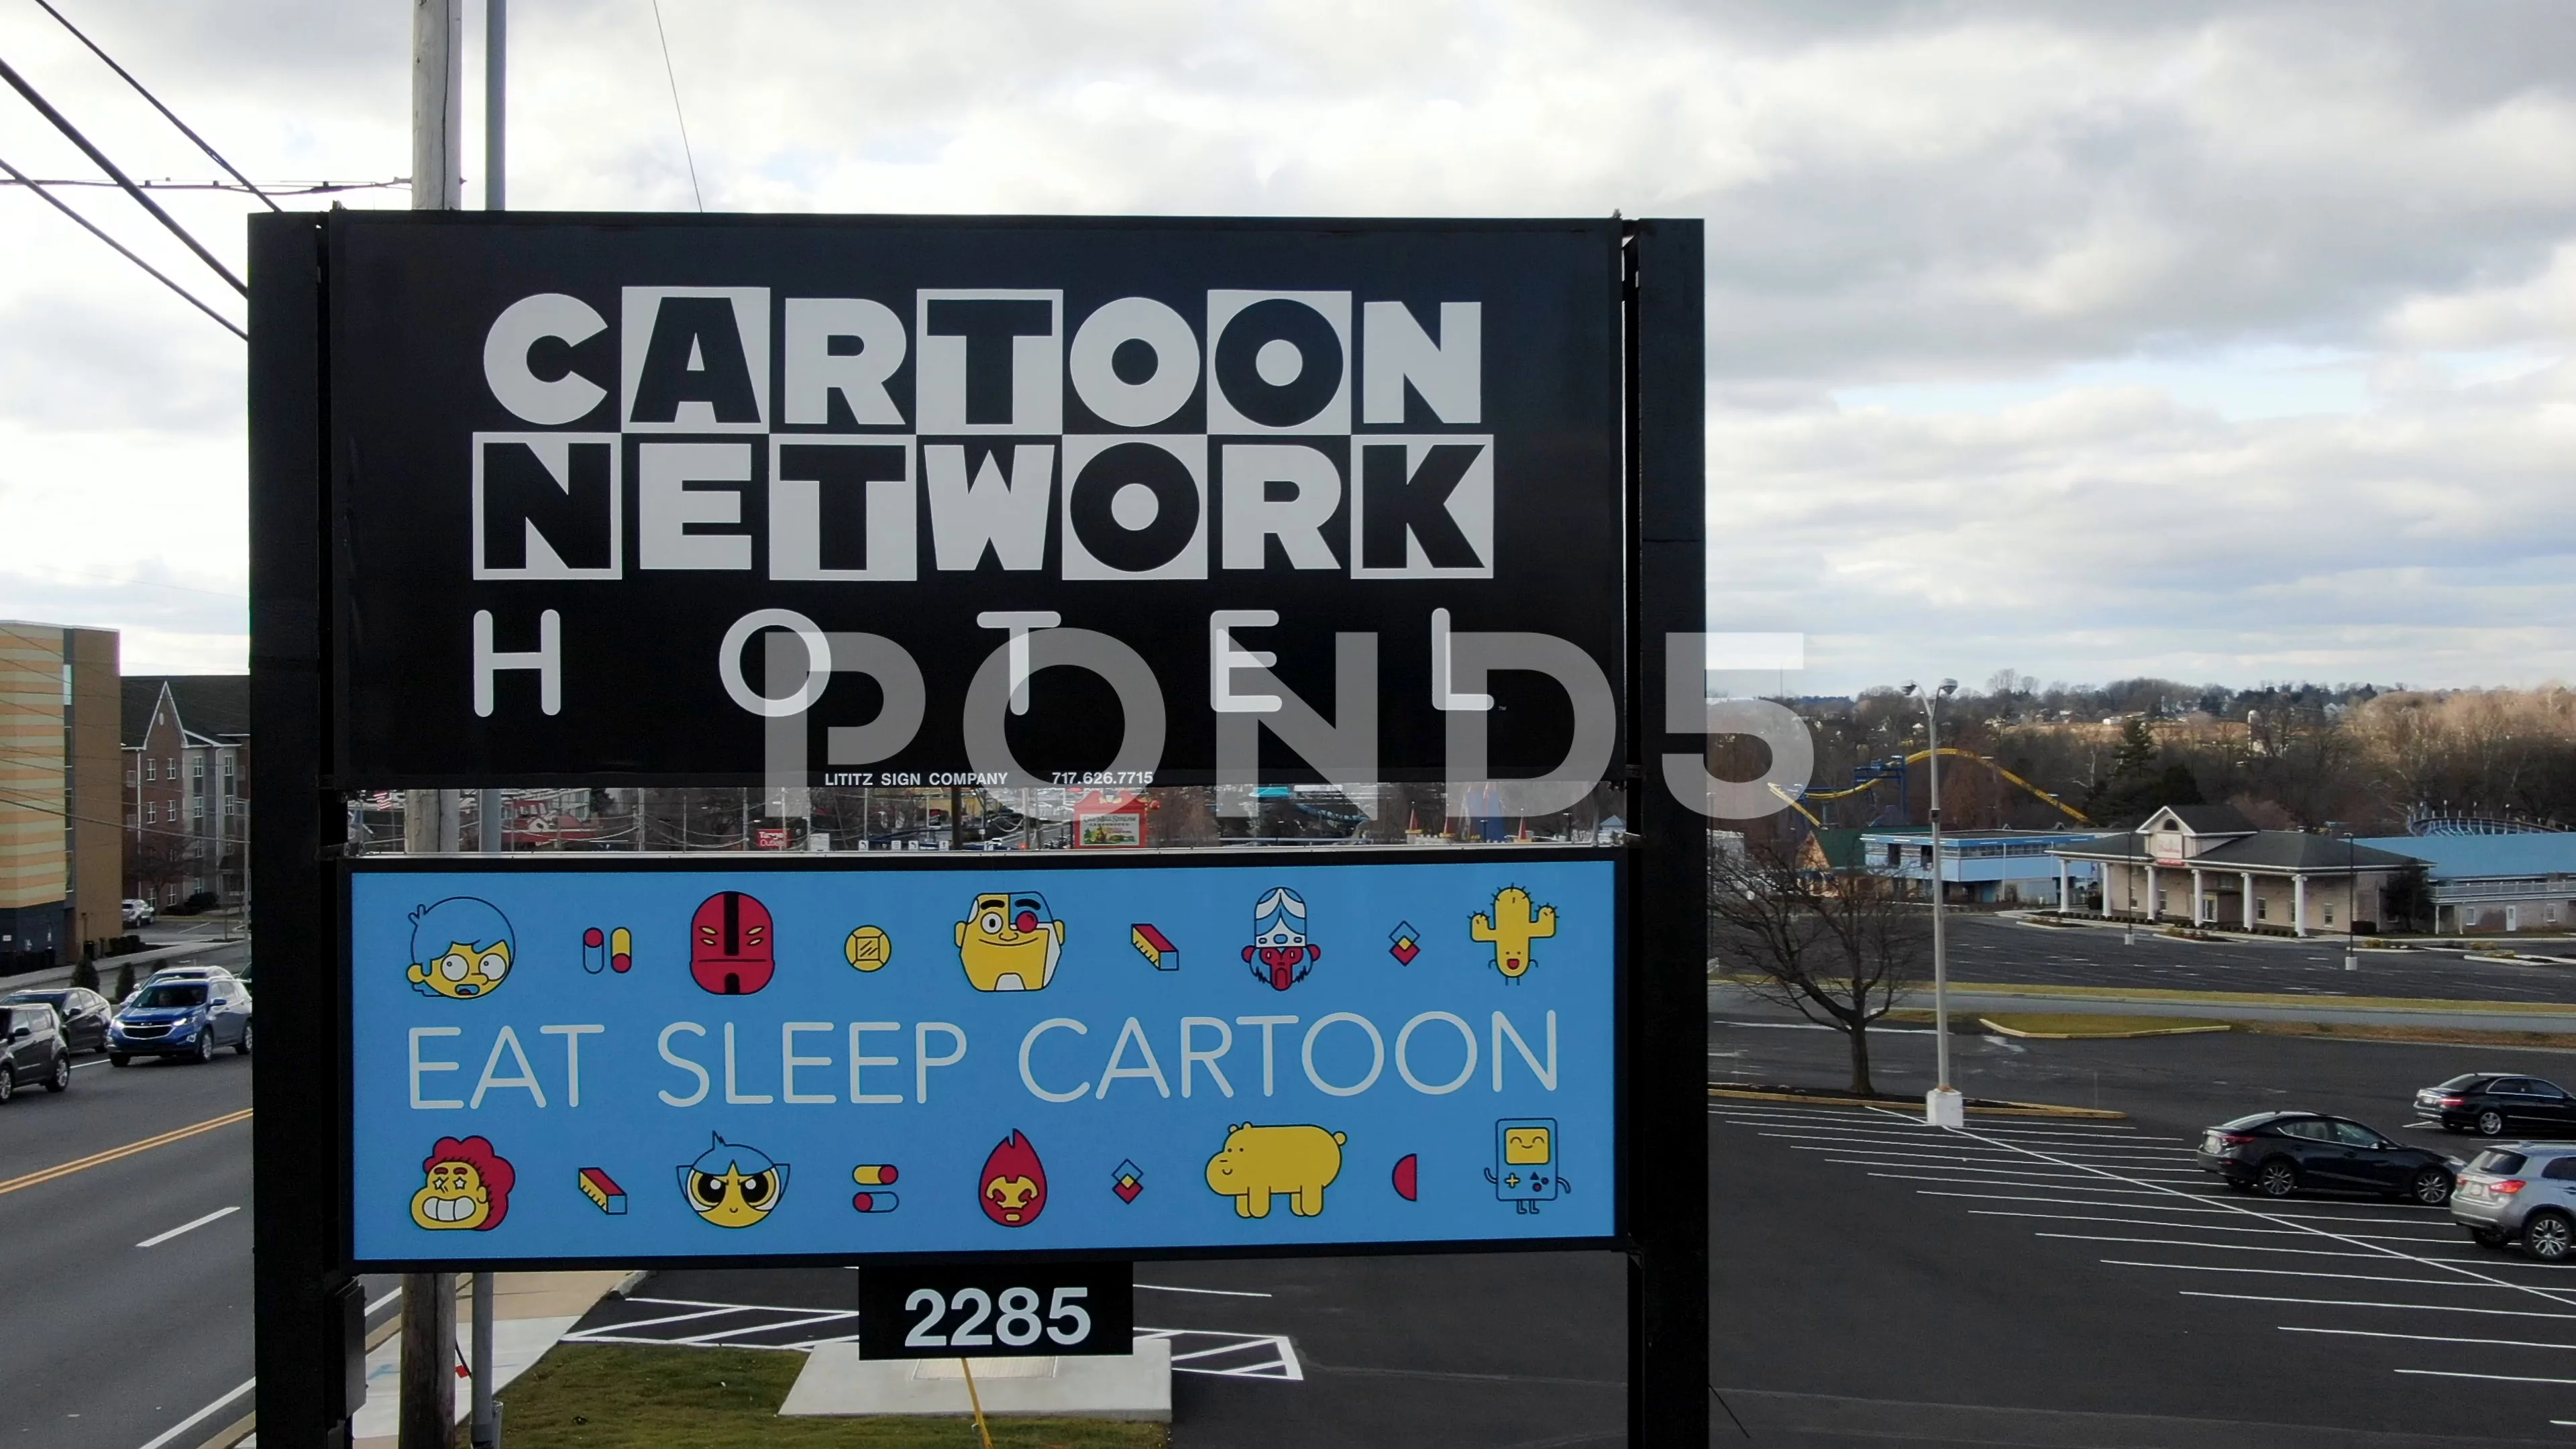 Cartoon Network Hotel on Vimeo